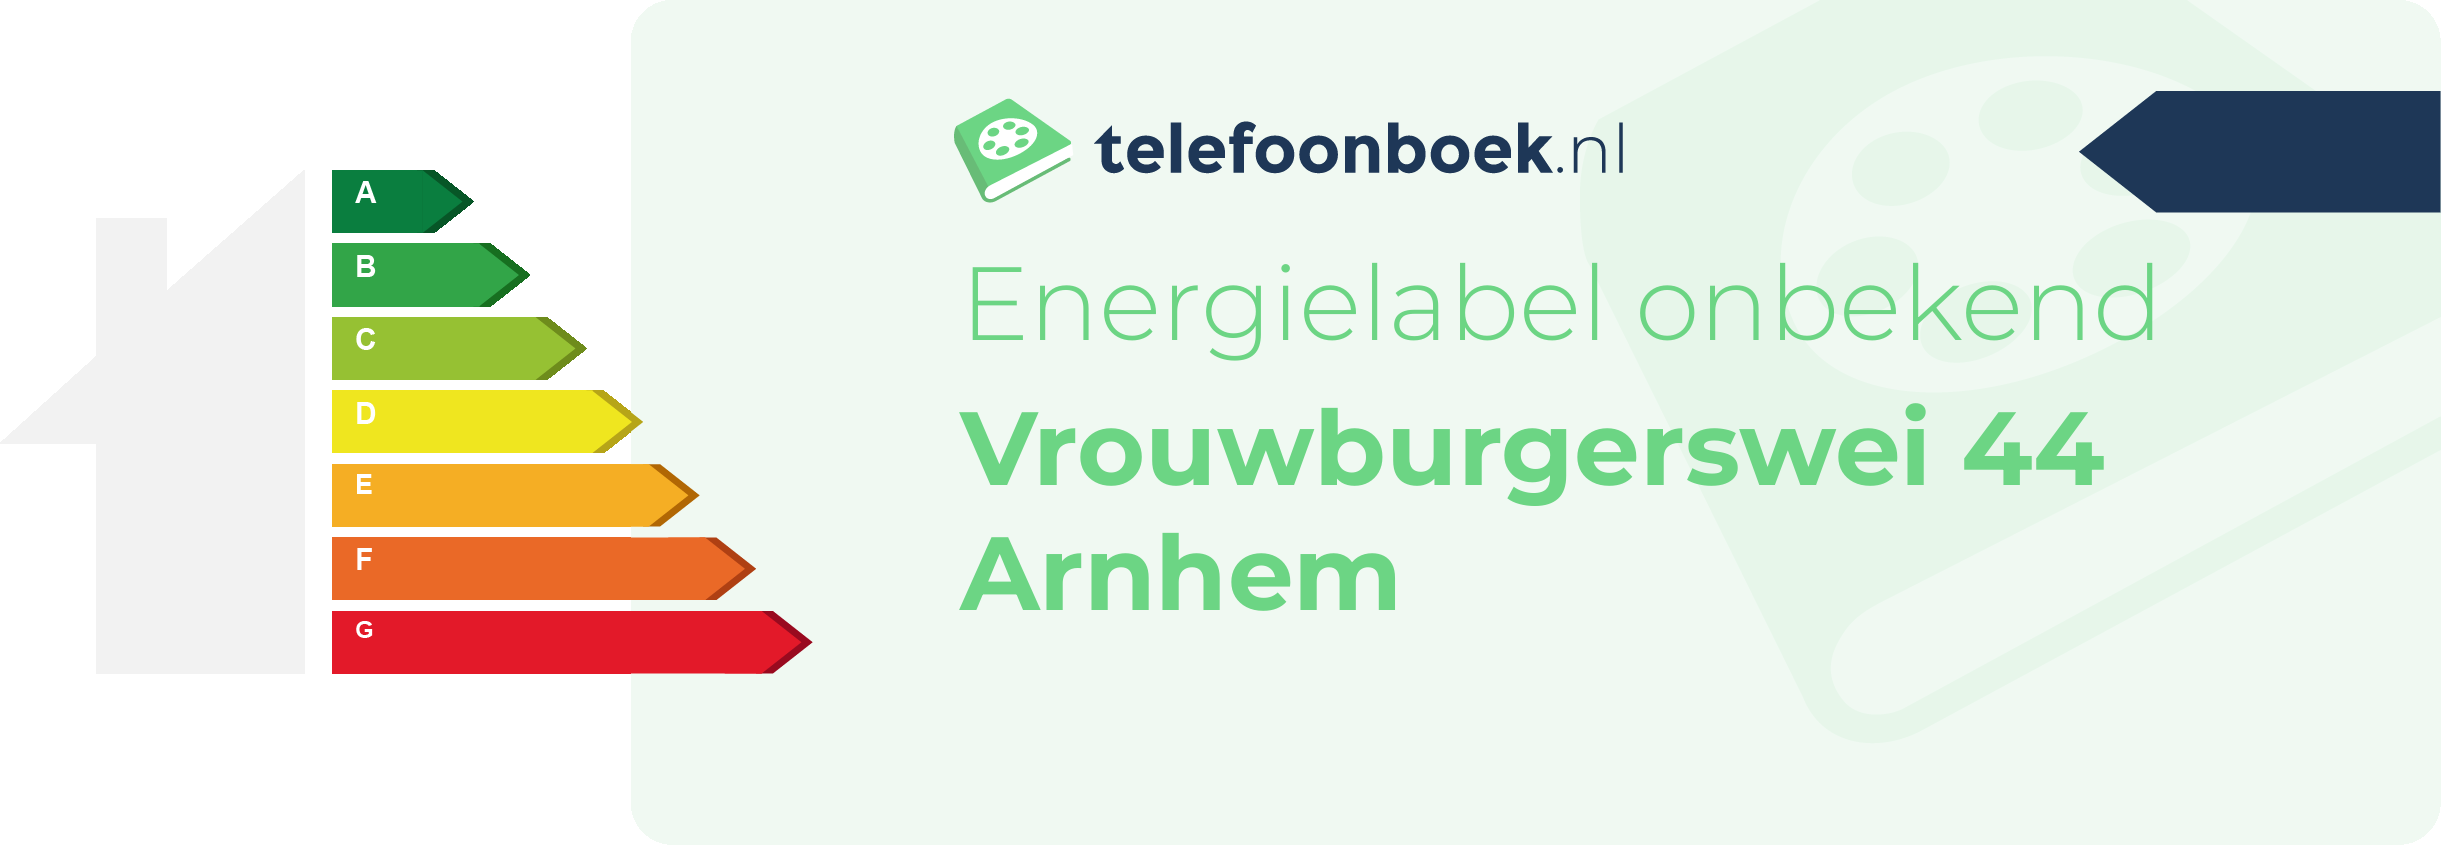 Energielabel Vrouwburgerswei 44 Arnhem